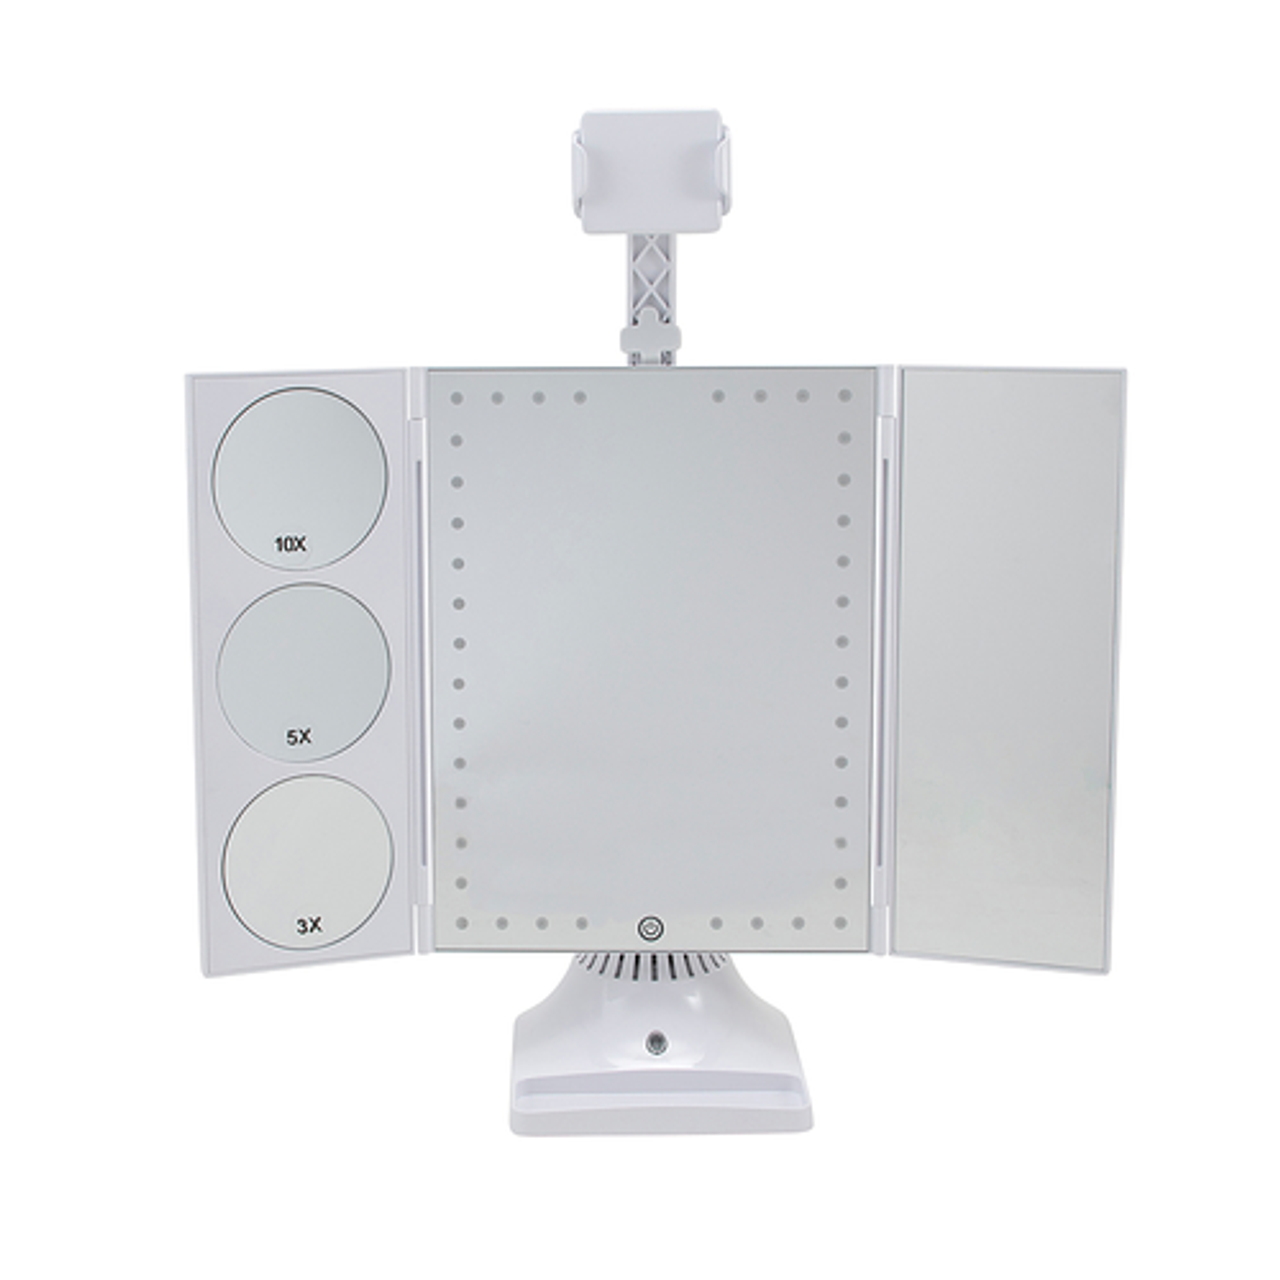 Glo-Tech Bluetooth Selfie Mirror - White